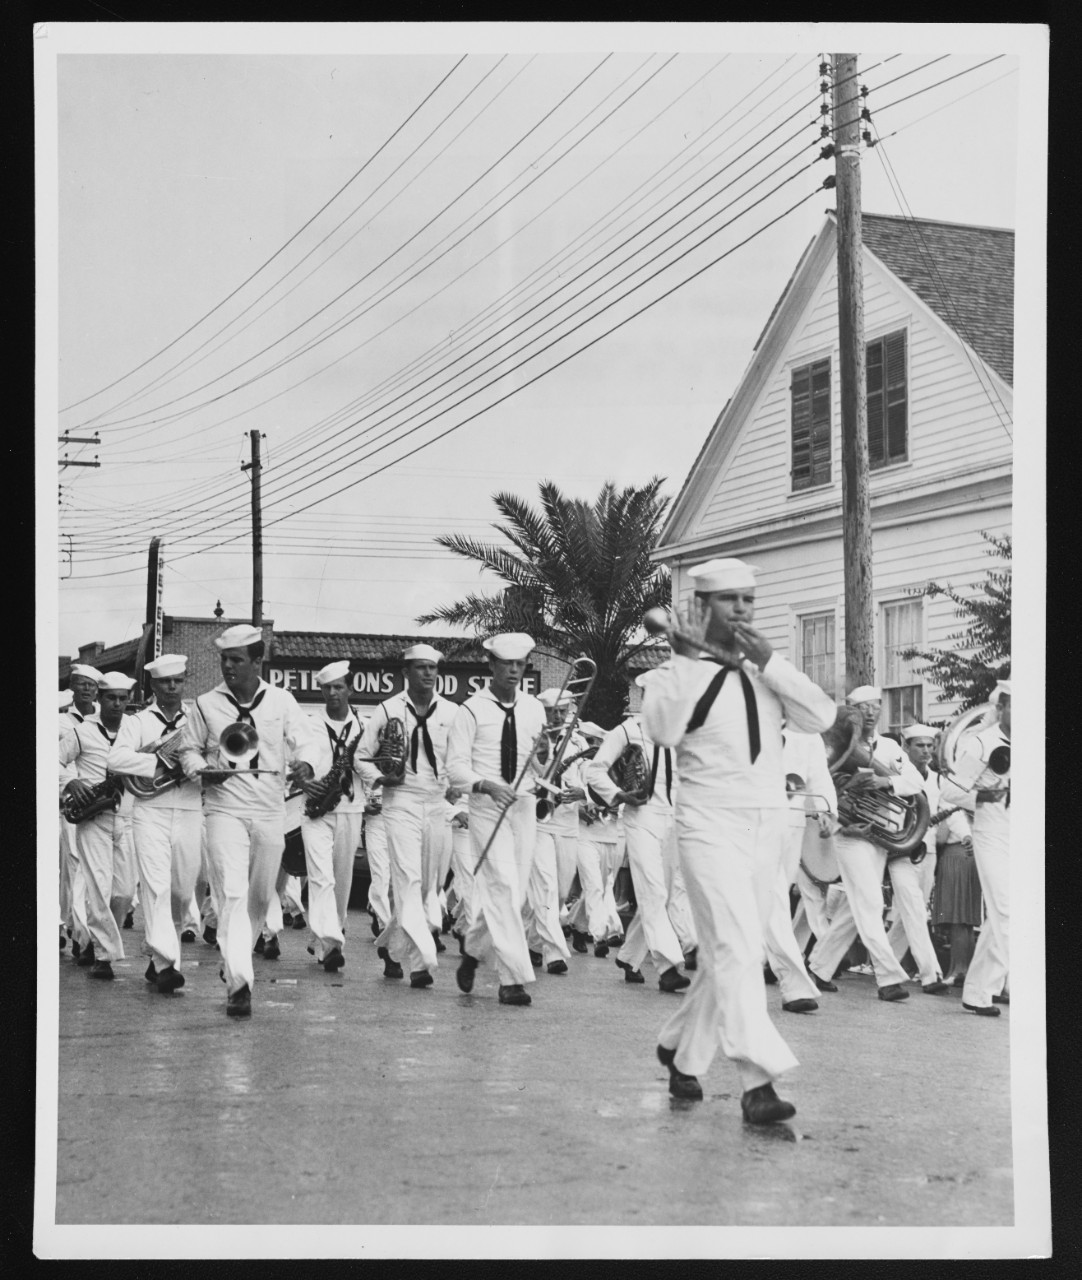 Admiral Nimitz Visits Naval Air Station in Corpus Christi for "Nimitz Day" Celebration